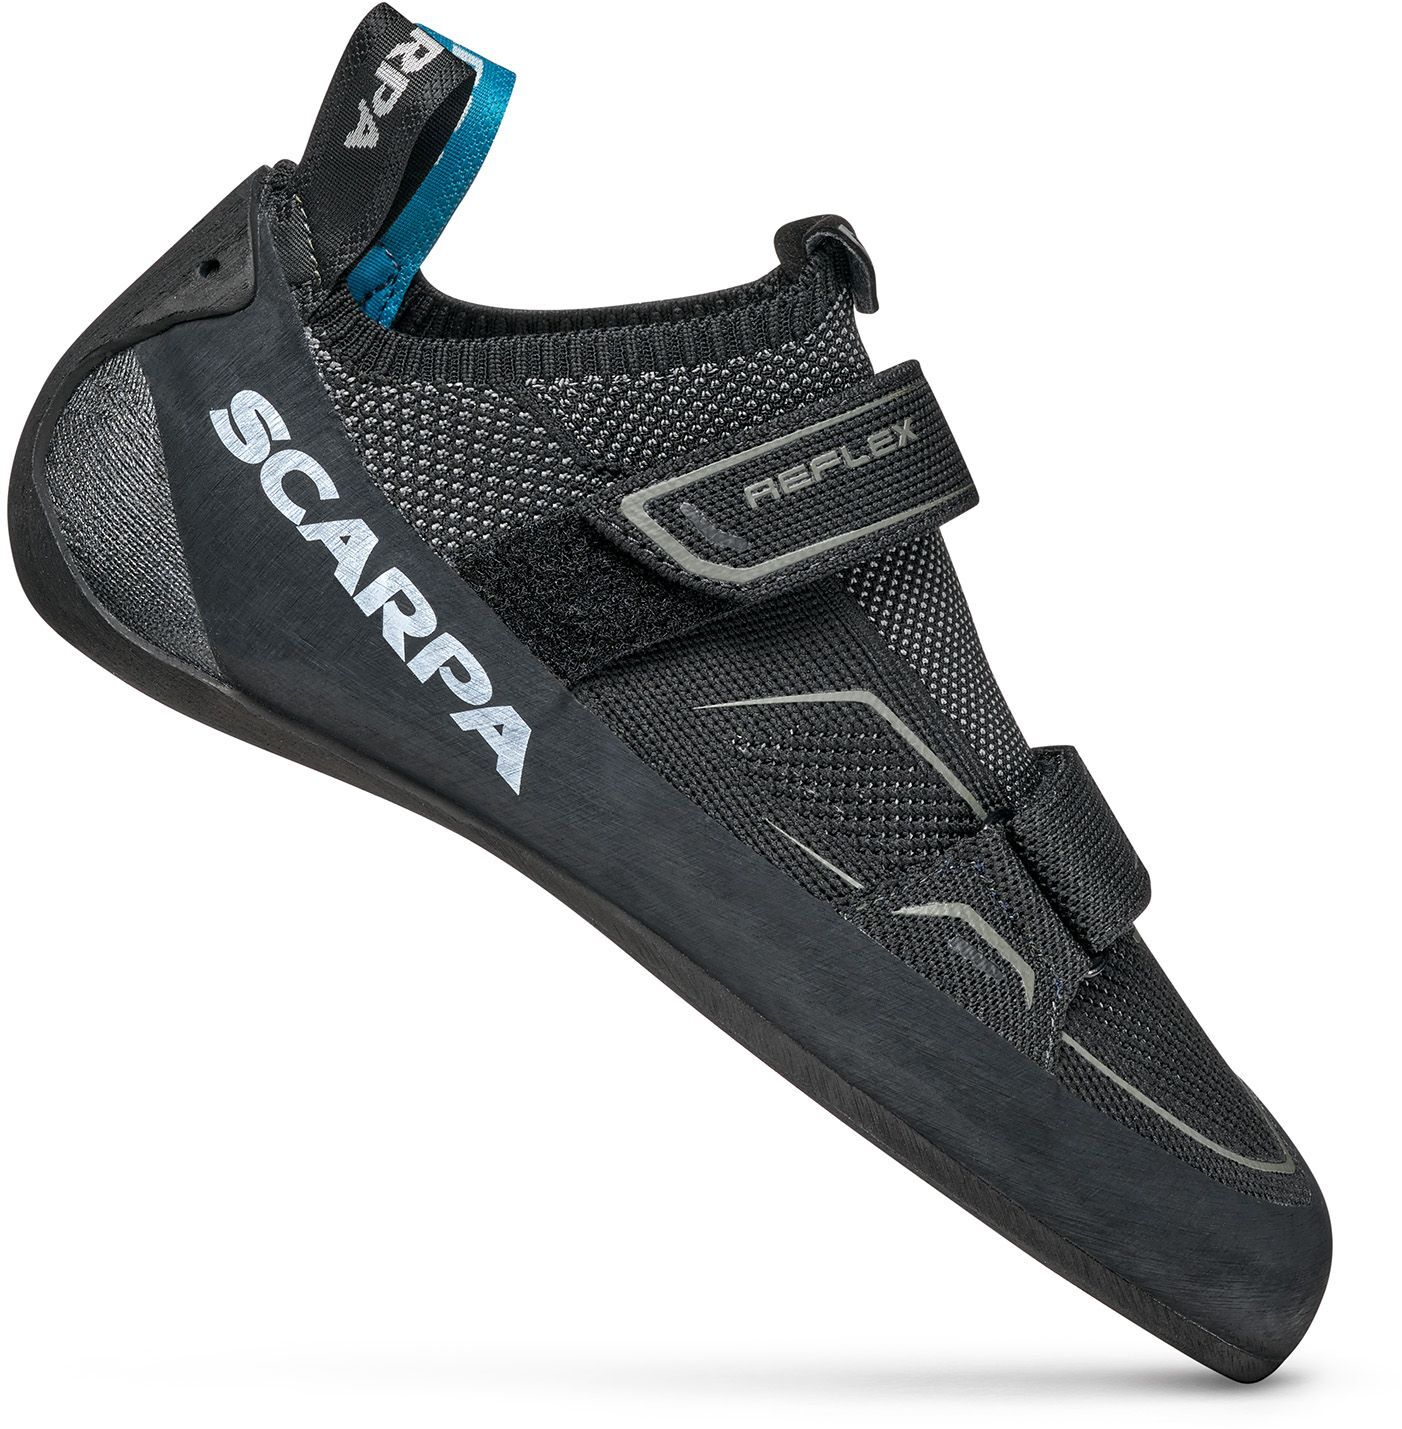 Scarpa Reflex V - Climbing shoes - Men's